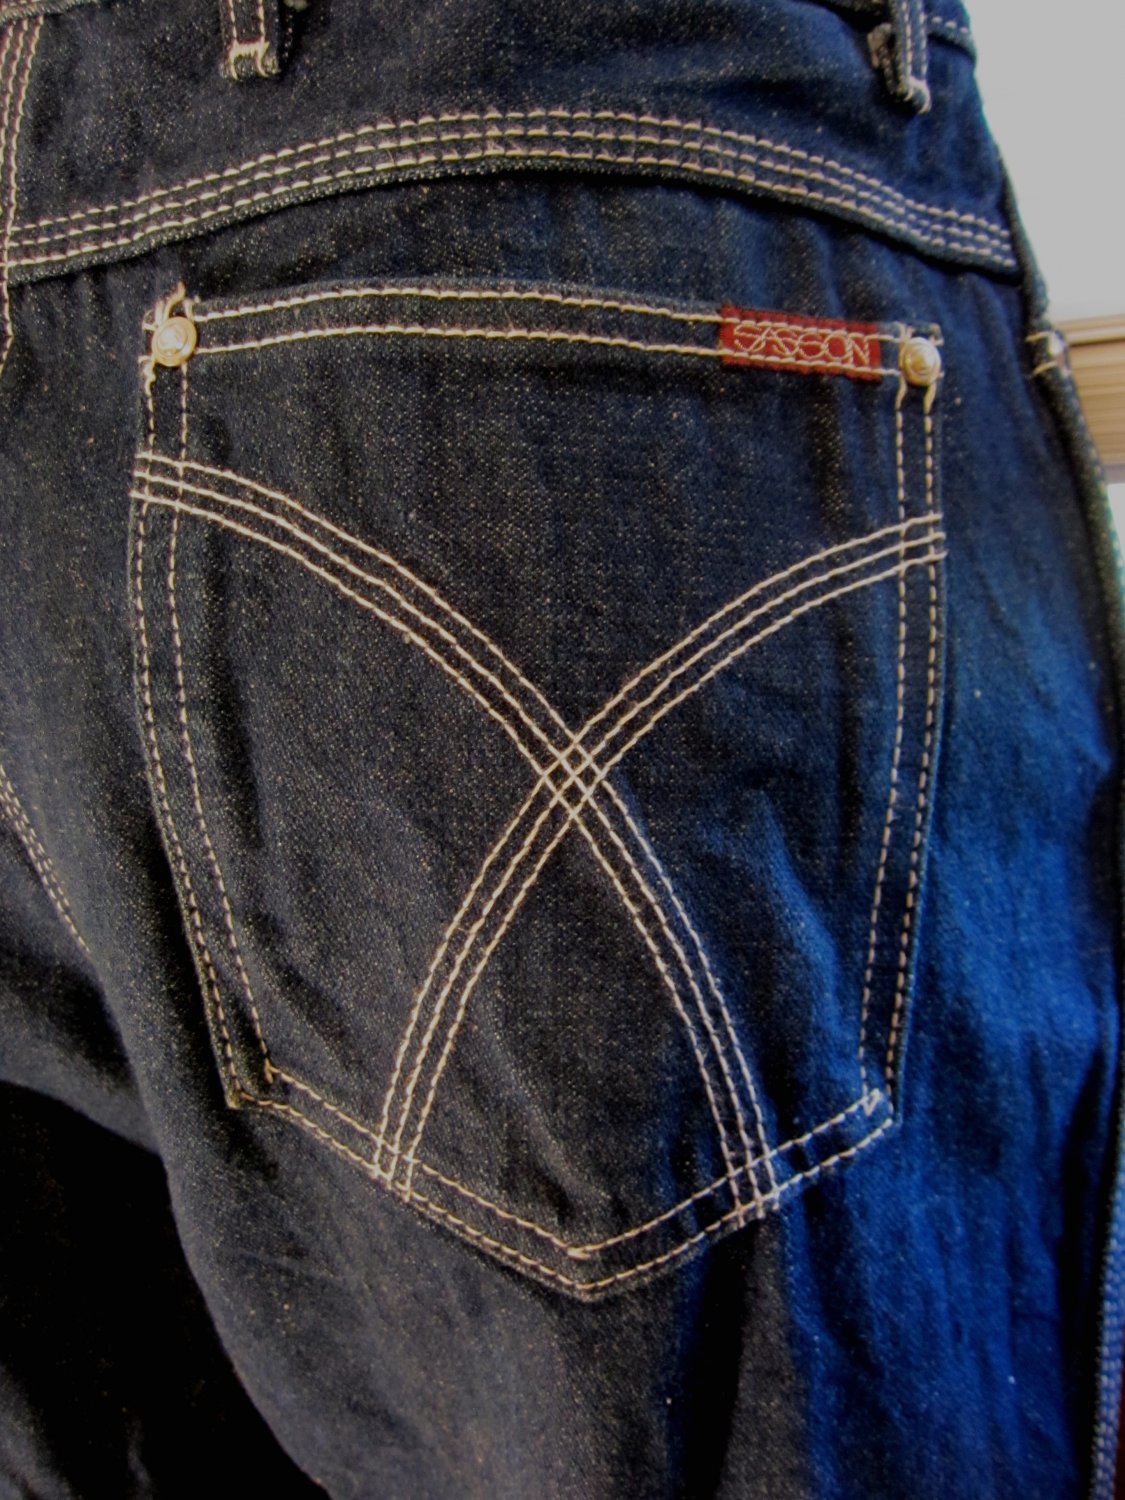 sasson jeans 70s